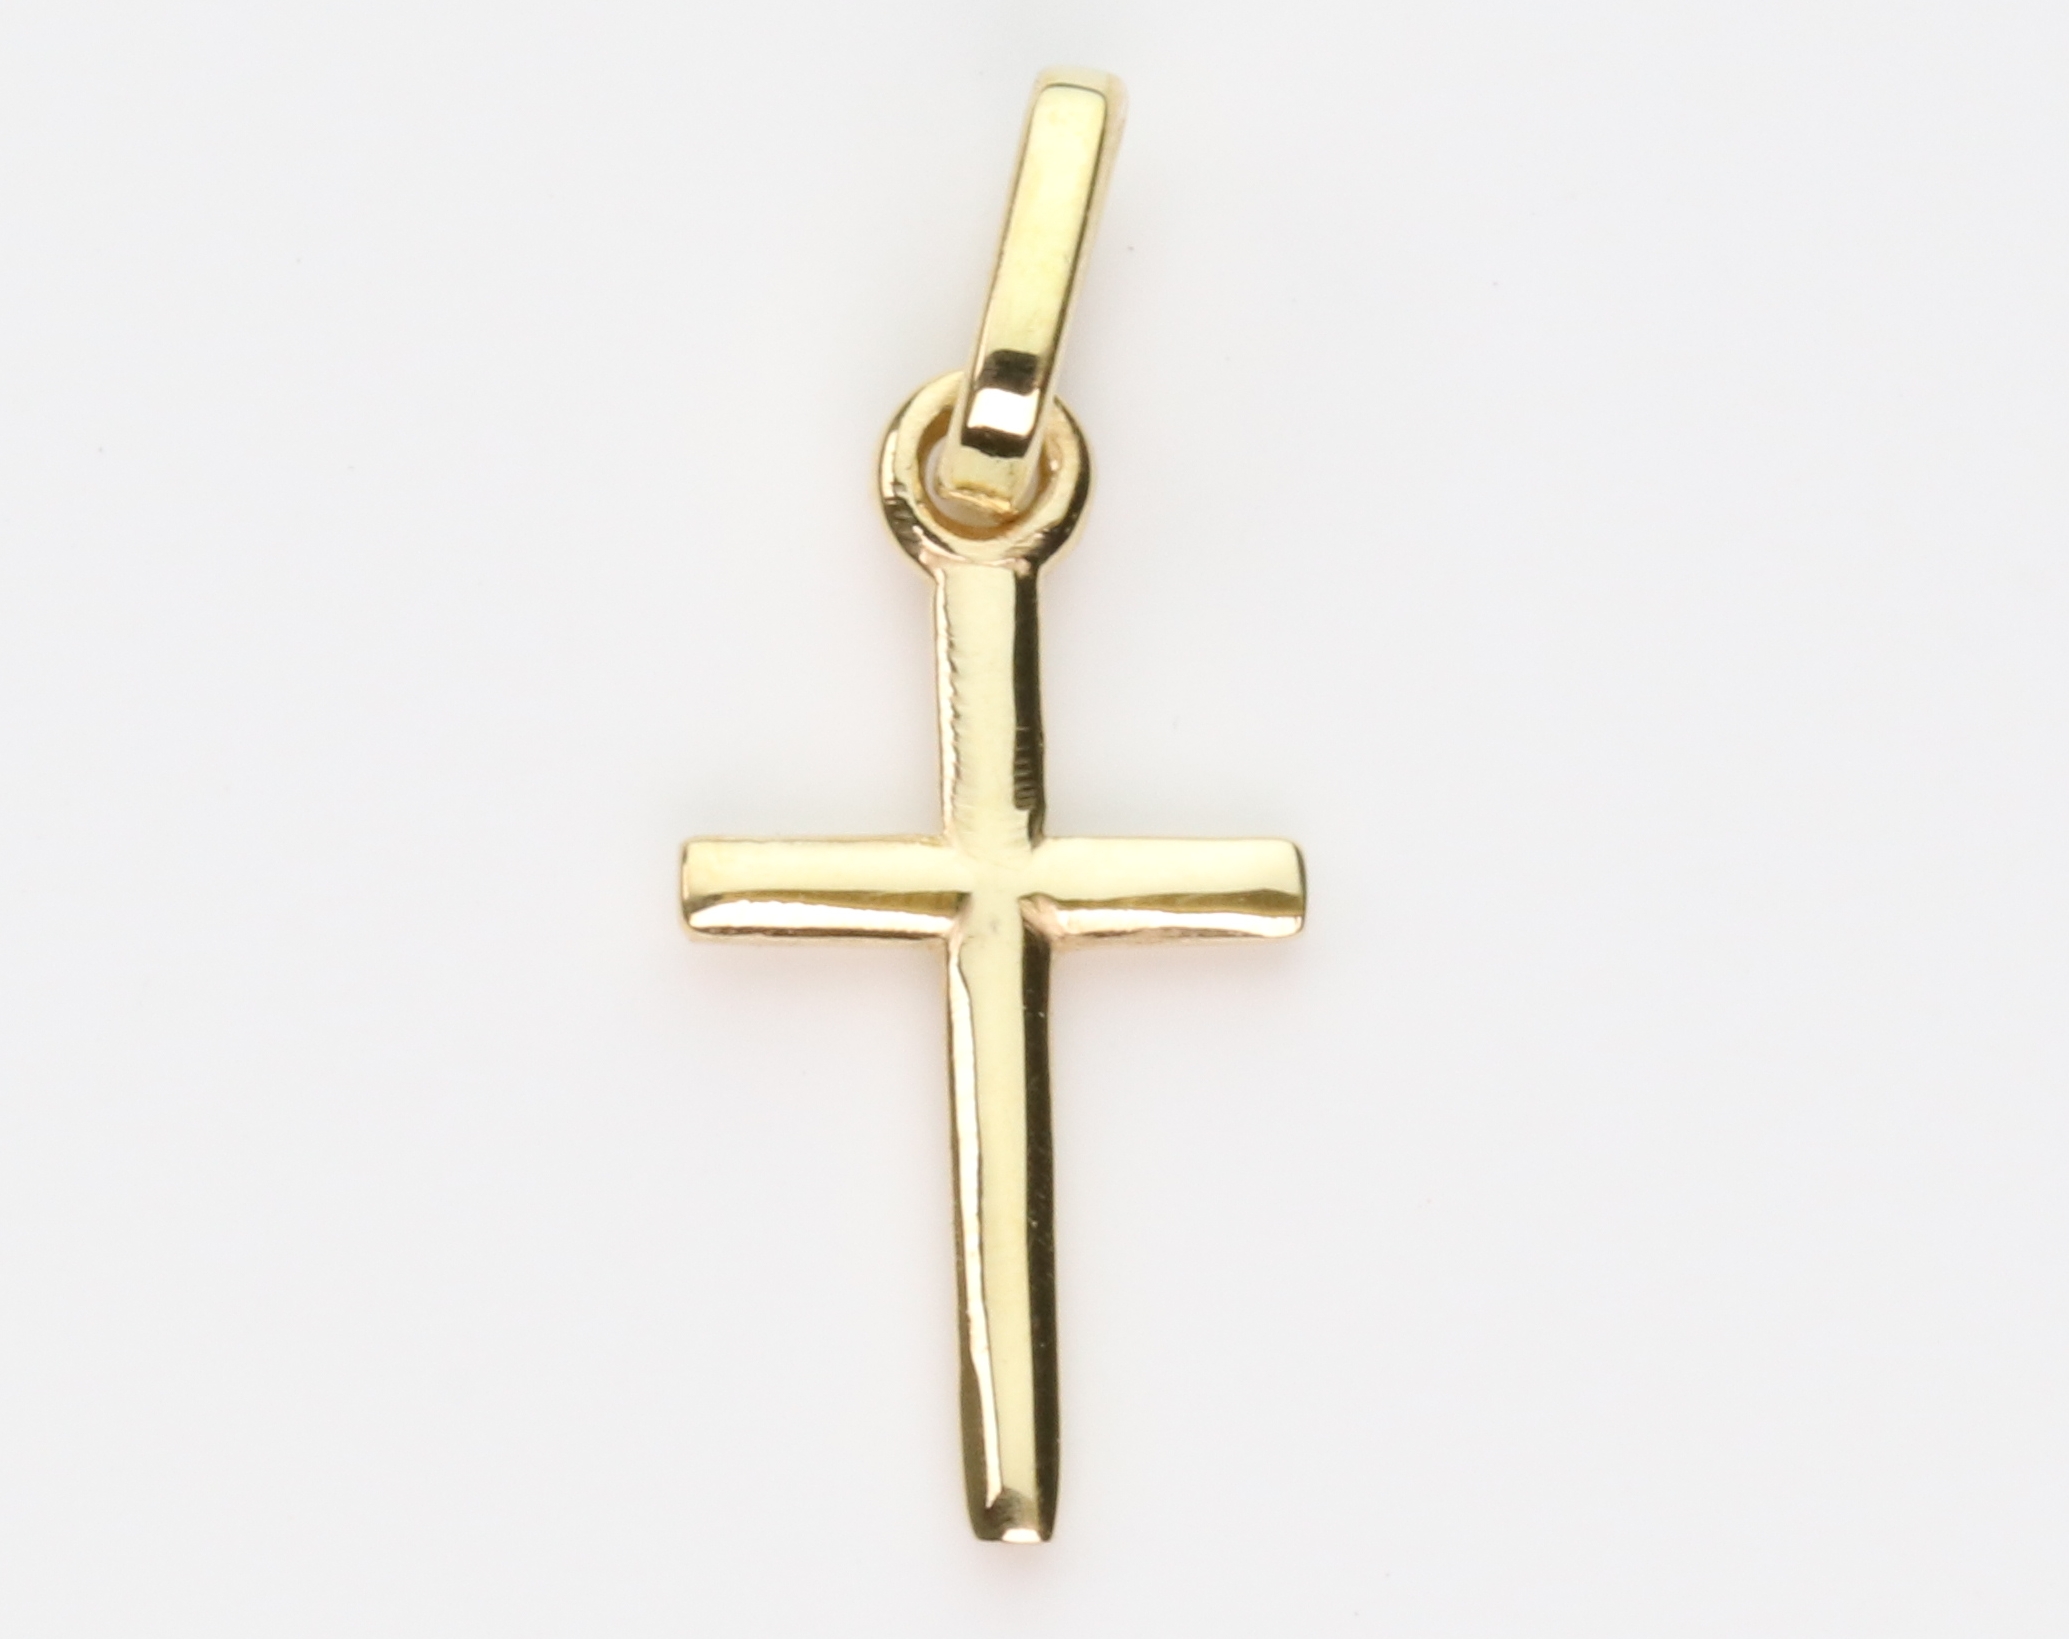 25 Carat Diamond White Gold Cross Pendant Necklace - petersuchyjewelers